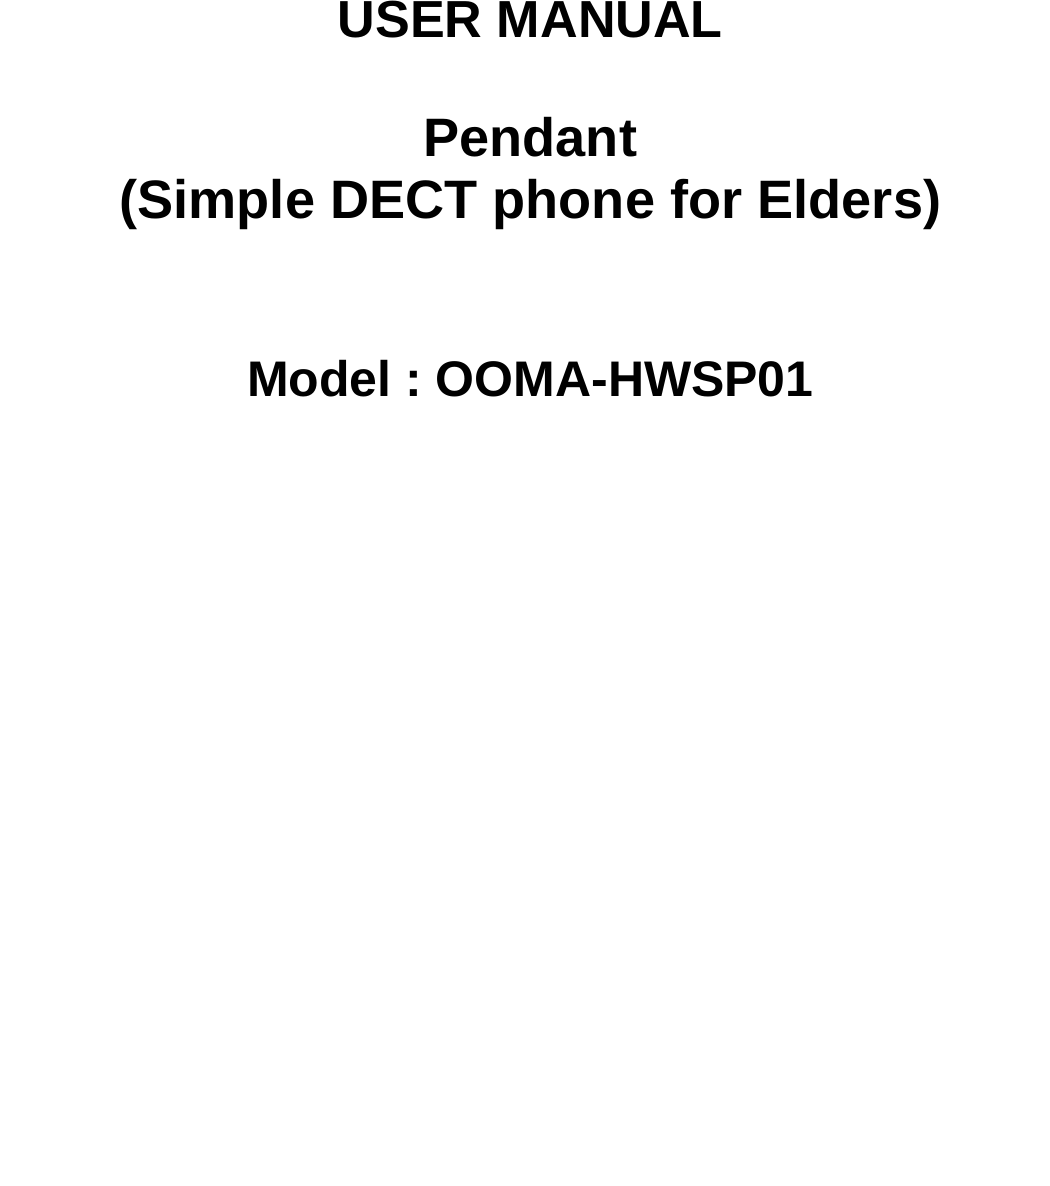          USER MANUAL   Pendant (Simple DECT phone for Elders)   Model : OOMA-HWSP01 